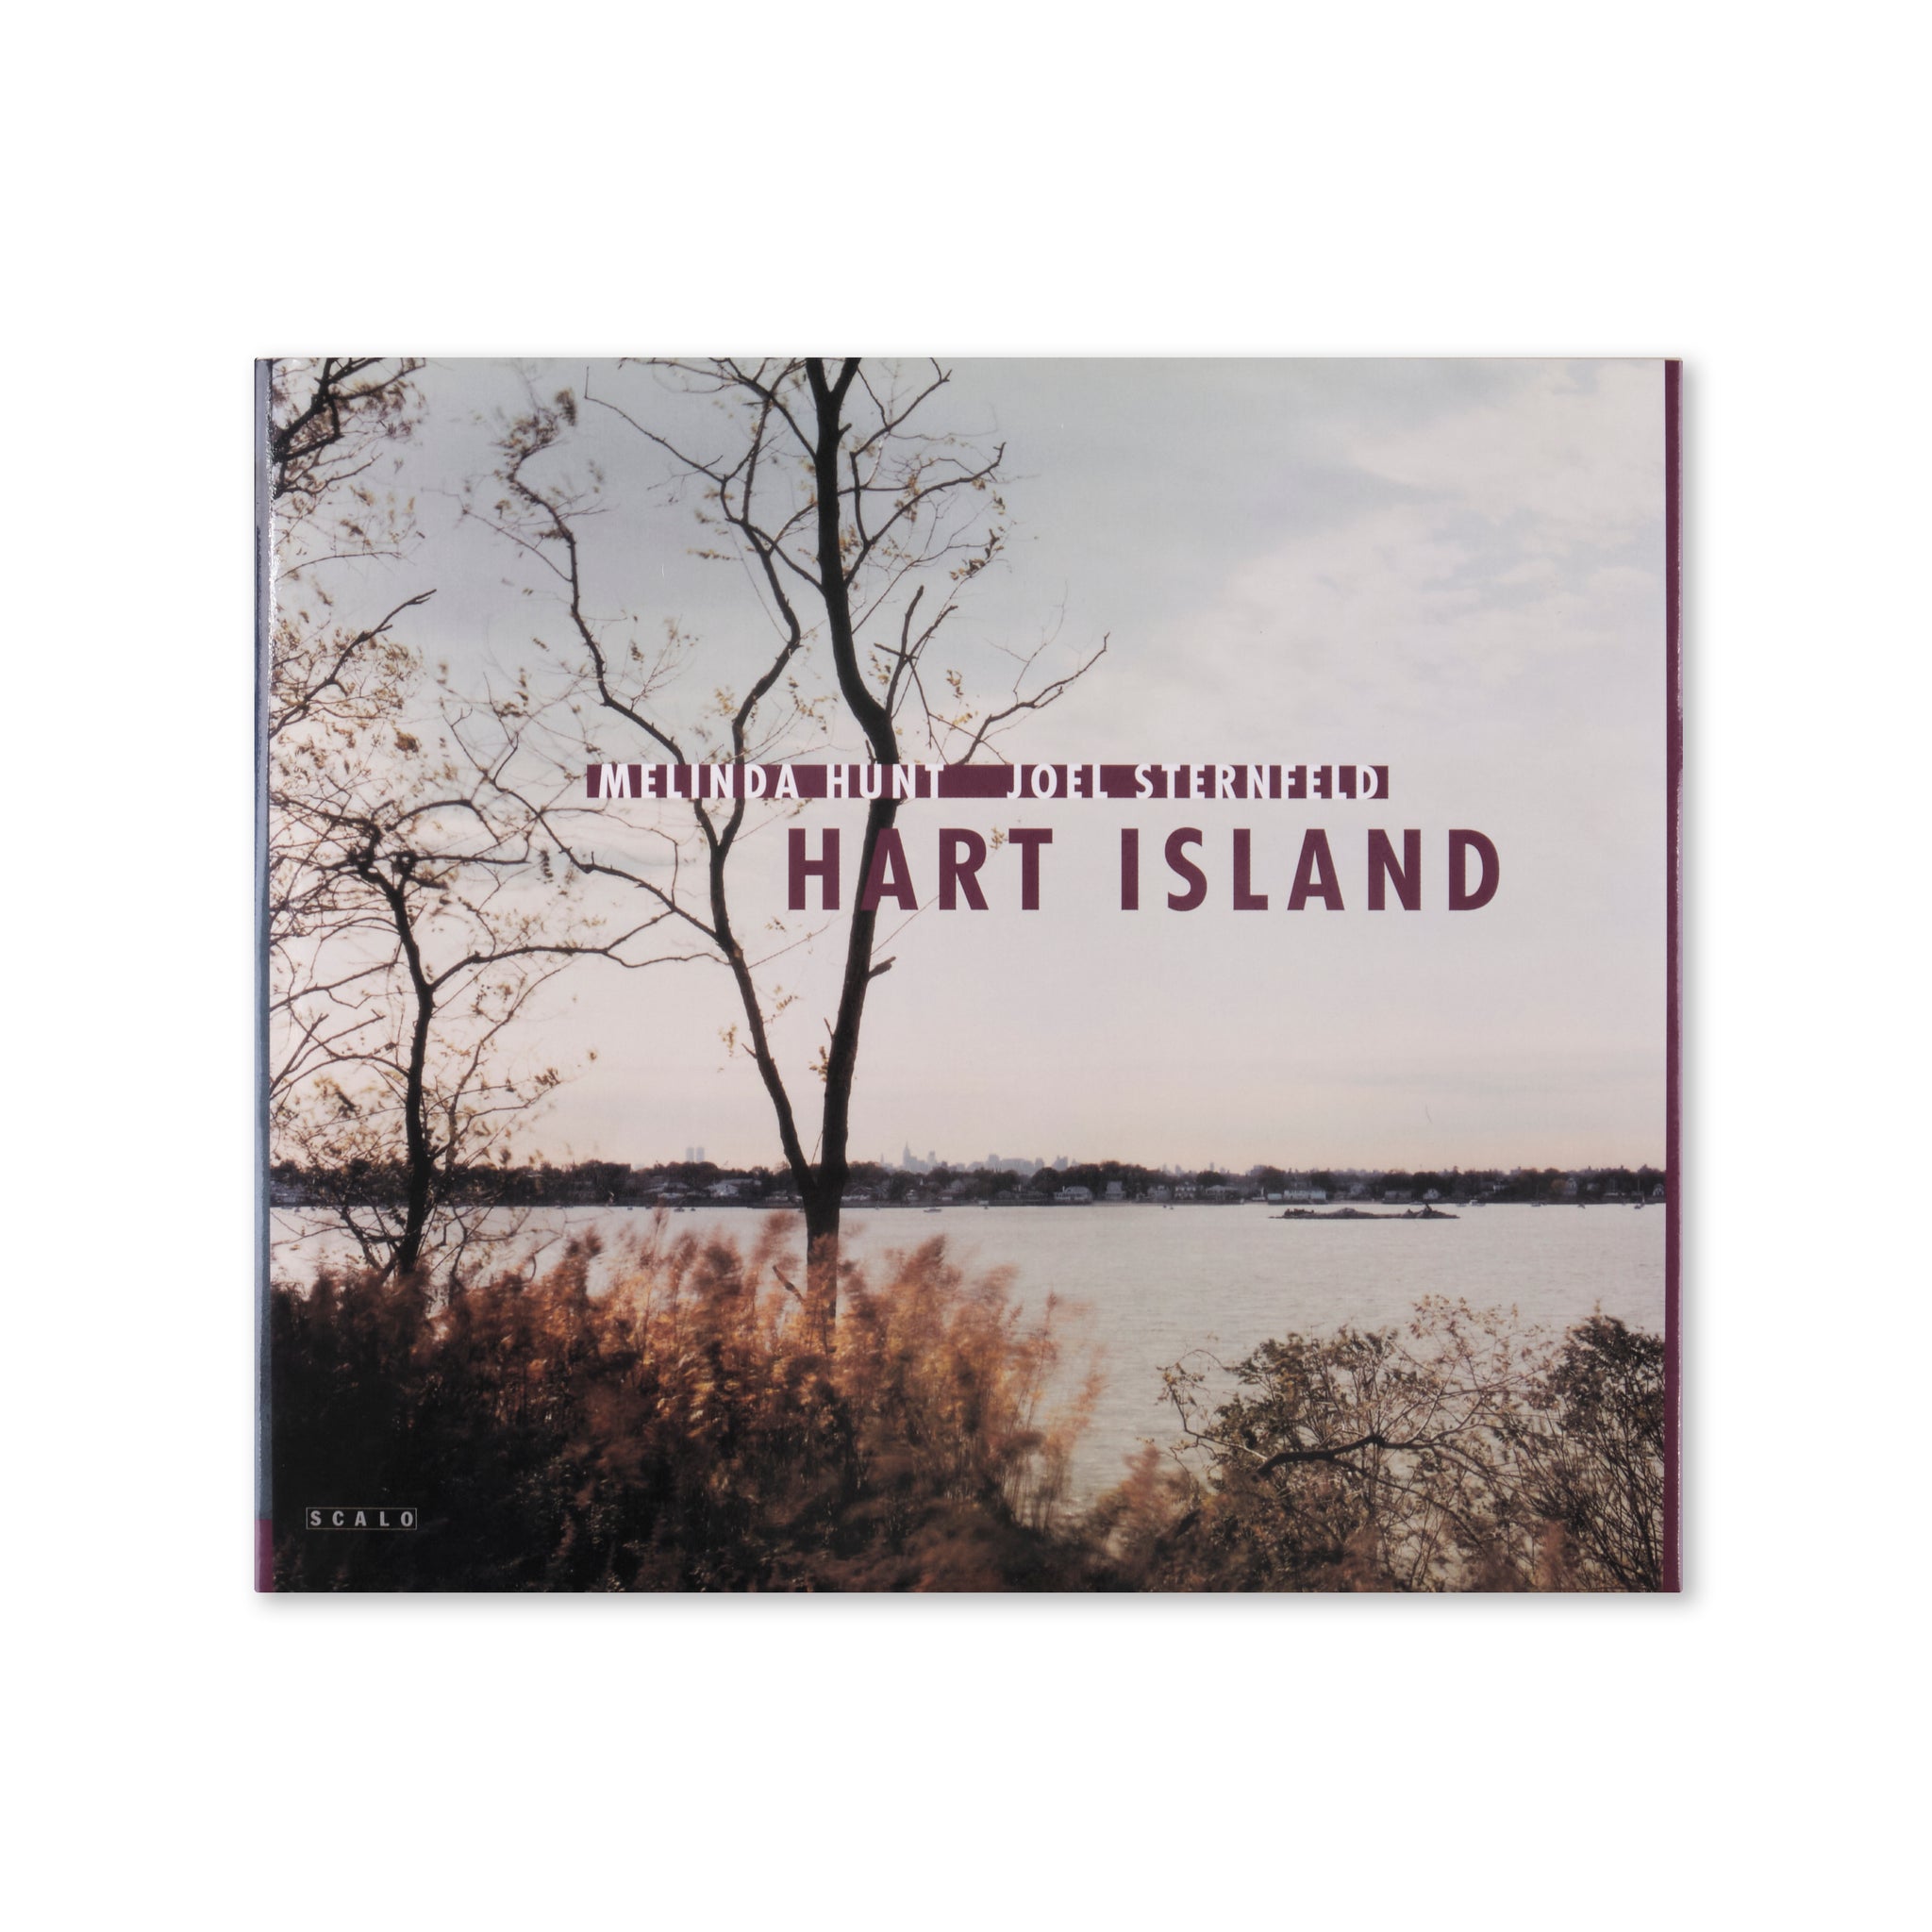 Joel Sternfeld & Melinda Hunt - Hart Island